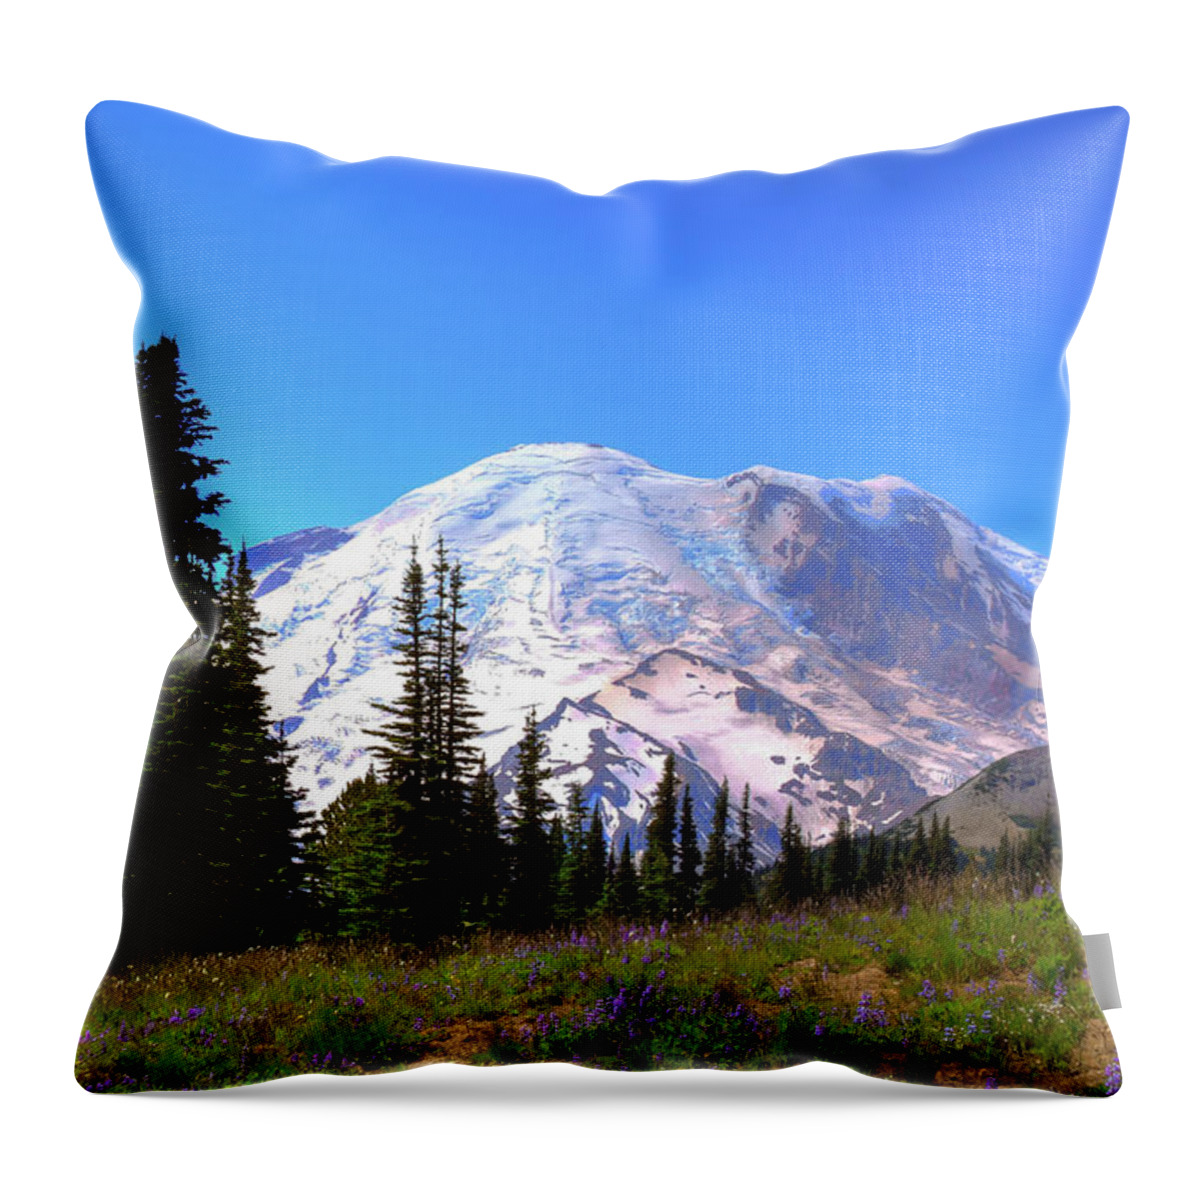 The Beautiful Mt Rainier Throw Pillow featuring the photograph The Beautiful Mt Rainier by David Patterson